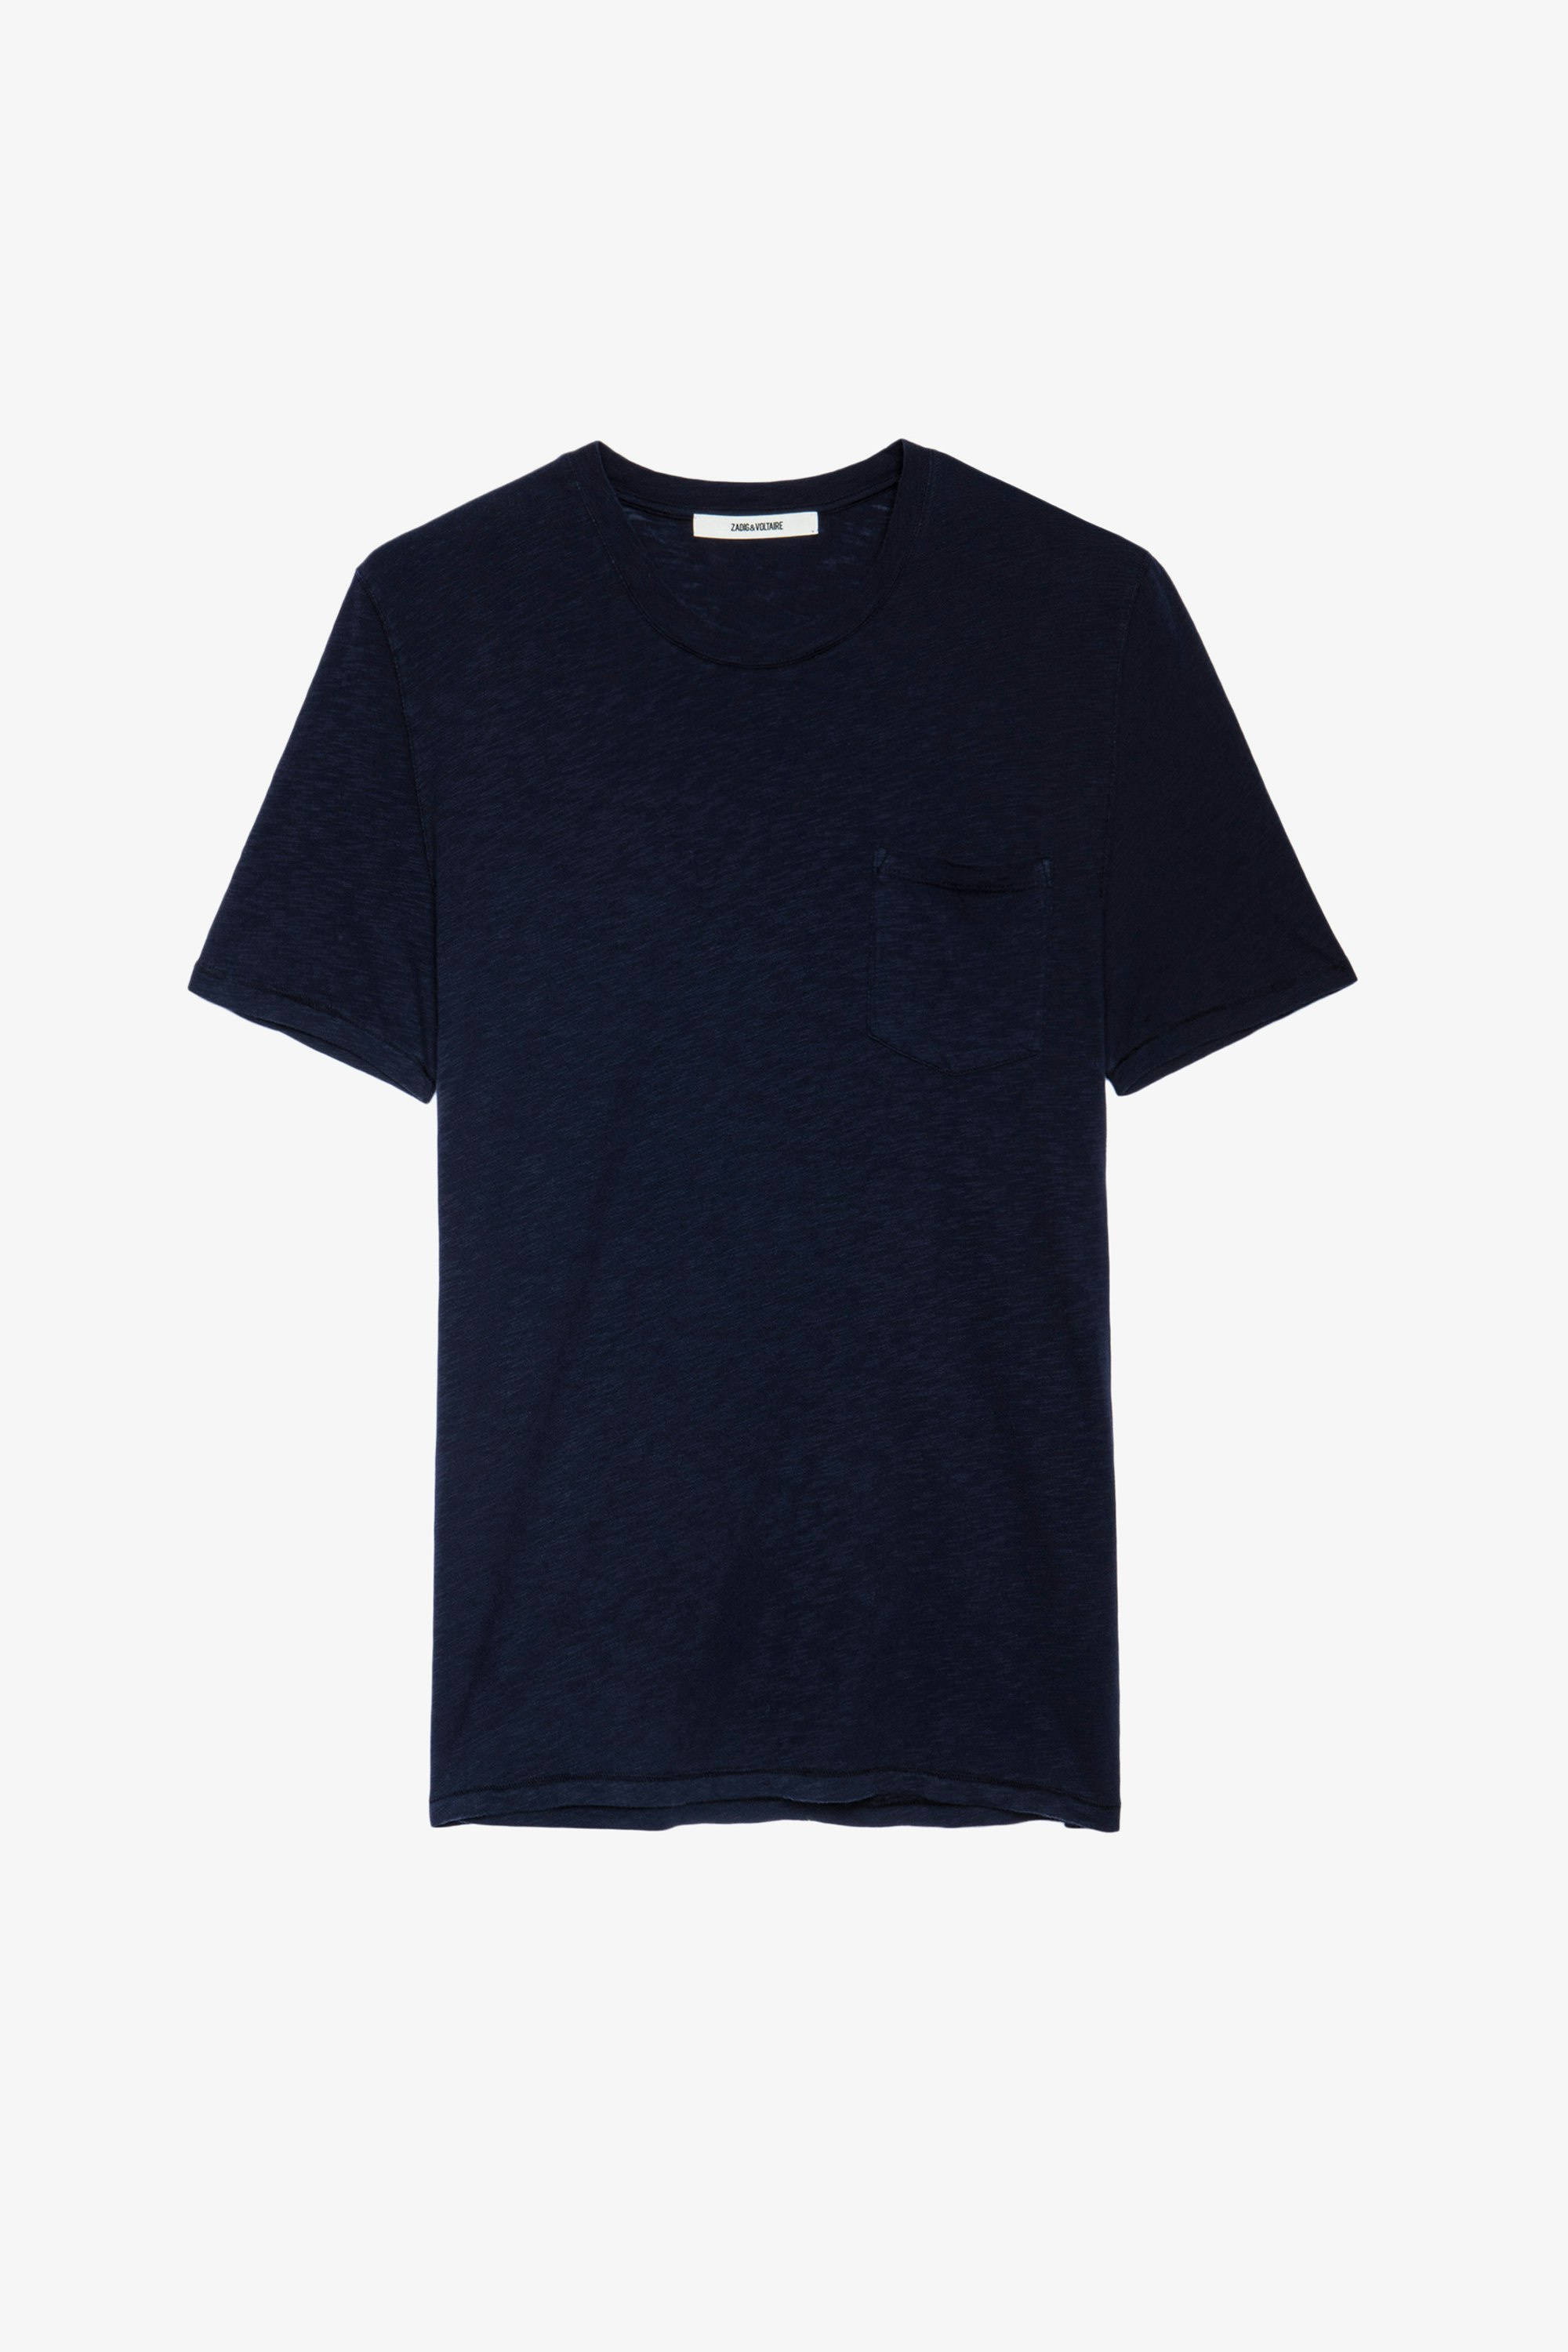 Camiseta Stockholm - Camiseta azul para hombre.